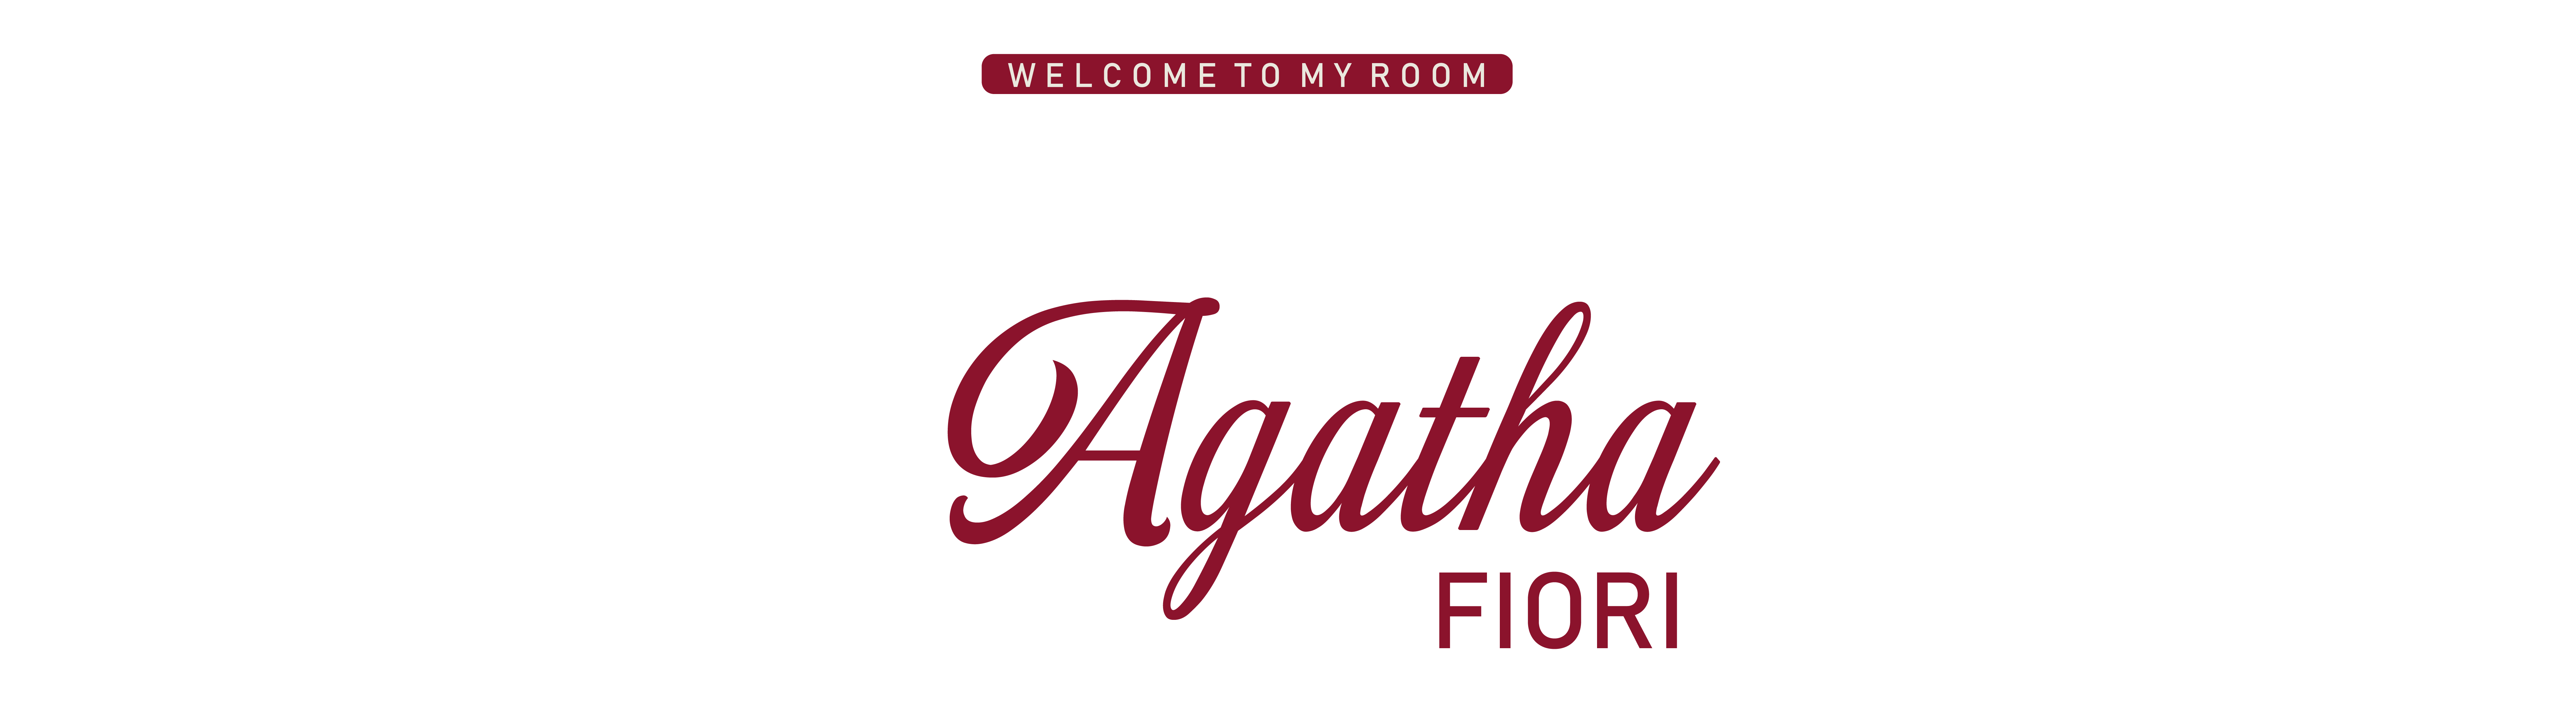 AgathaFiori Welcome! image: 1